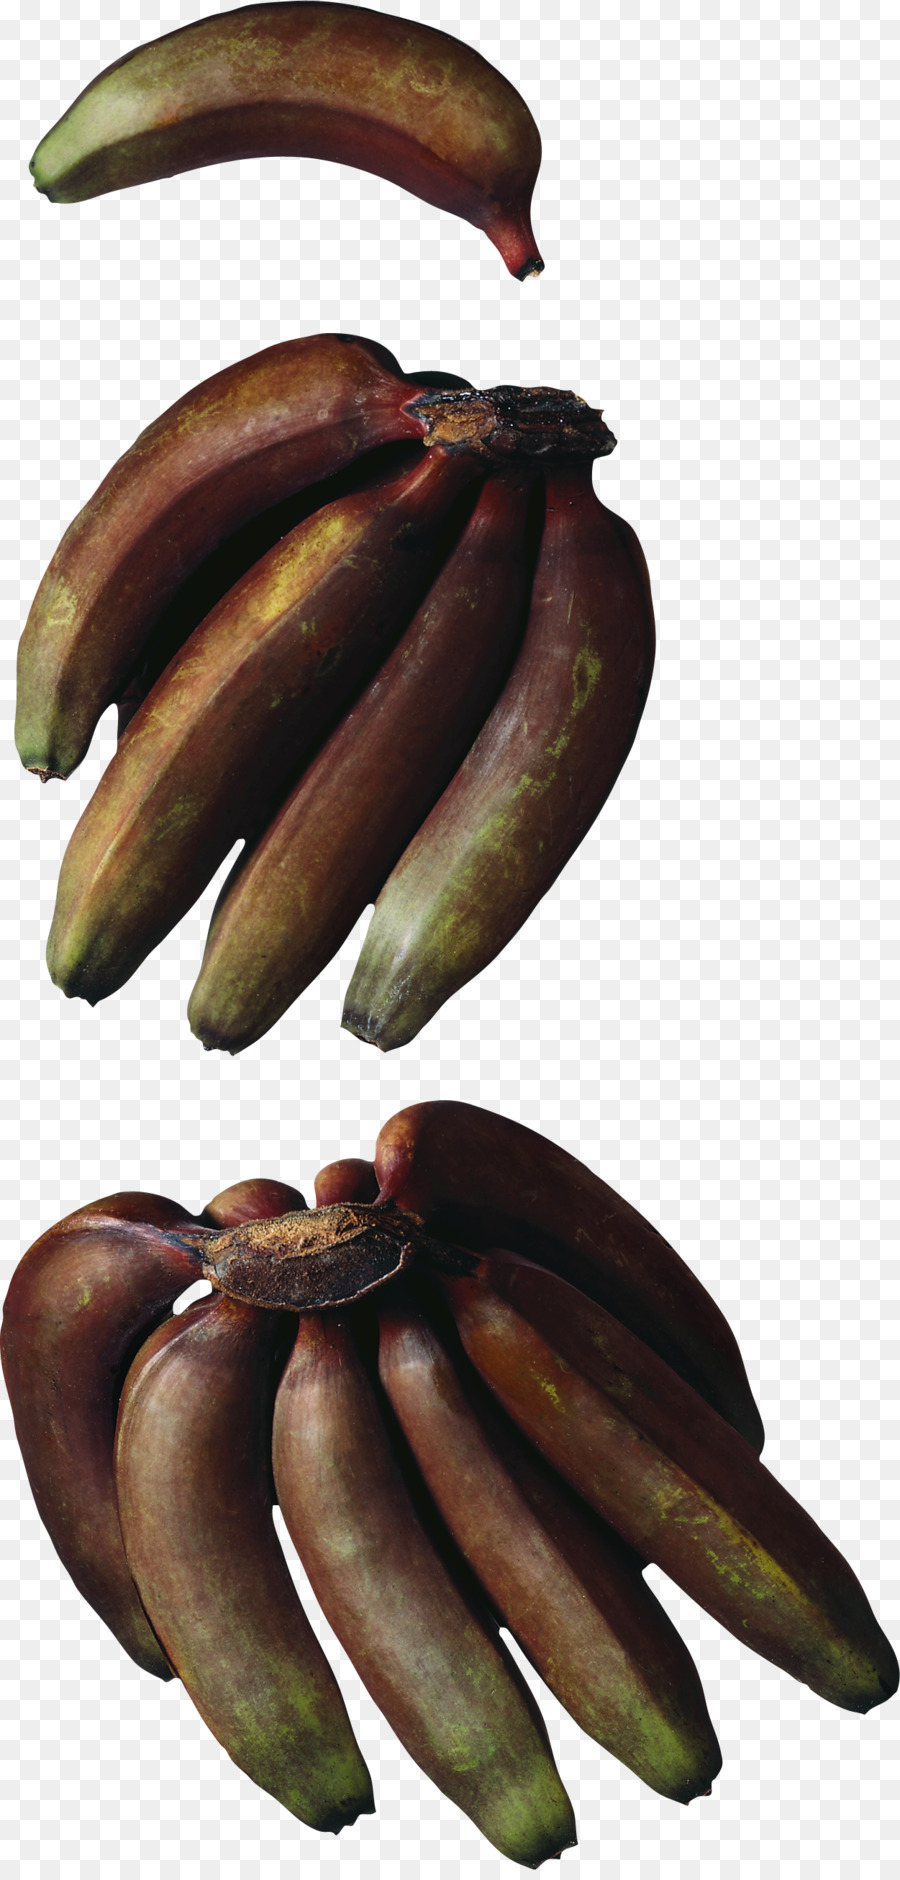 Kochen Bananen-Winterharte Banane Rot Banane Musa × paradisiaca - andere